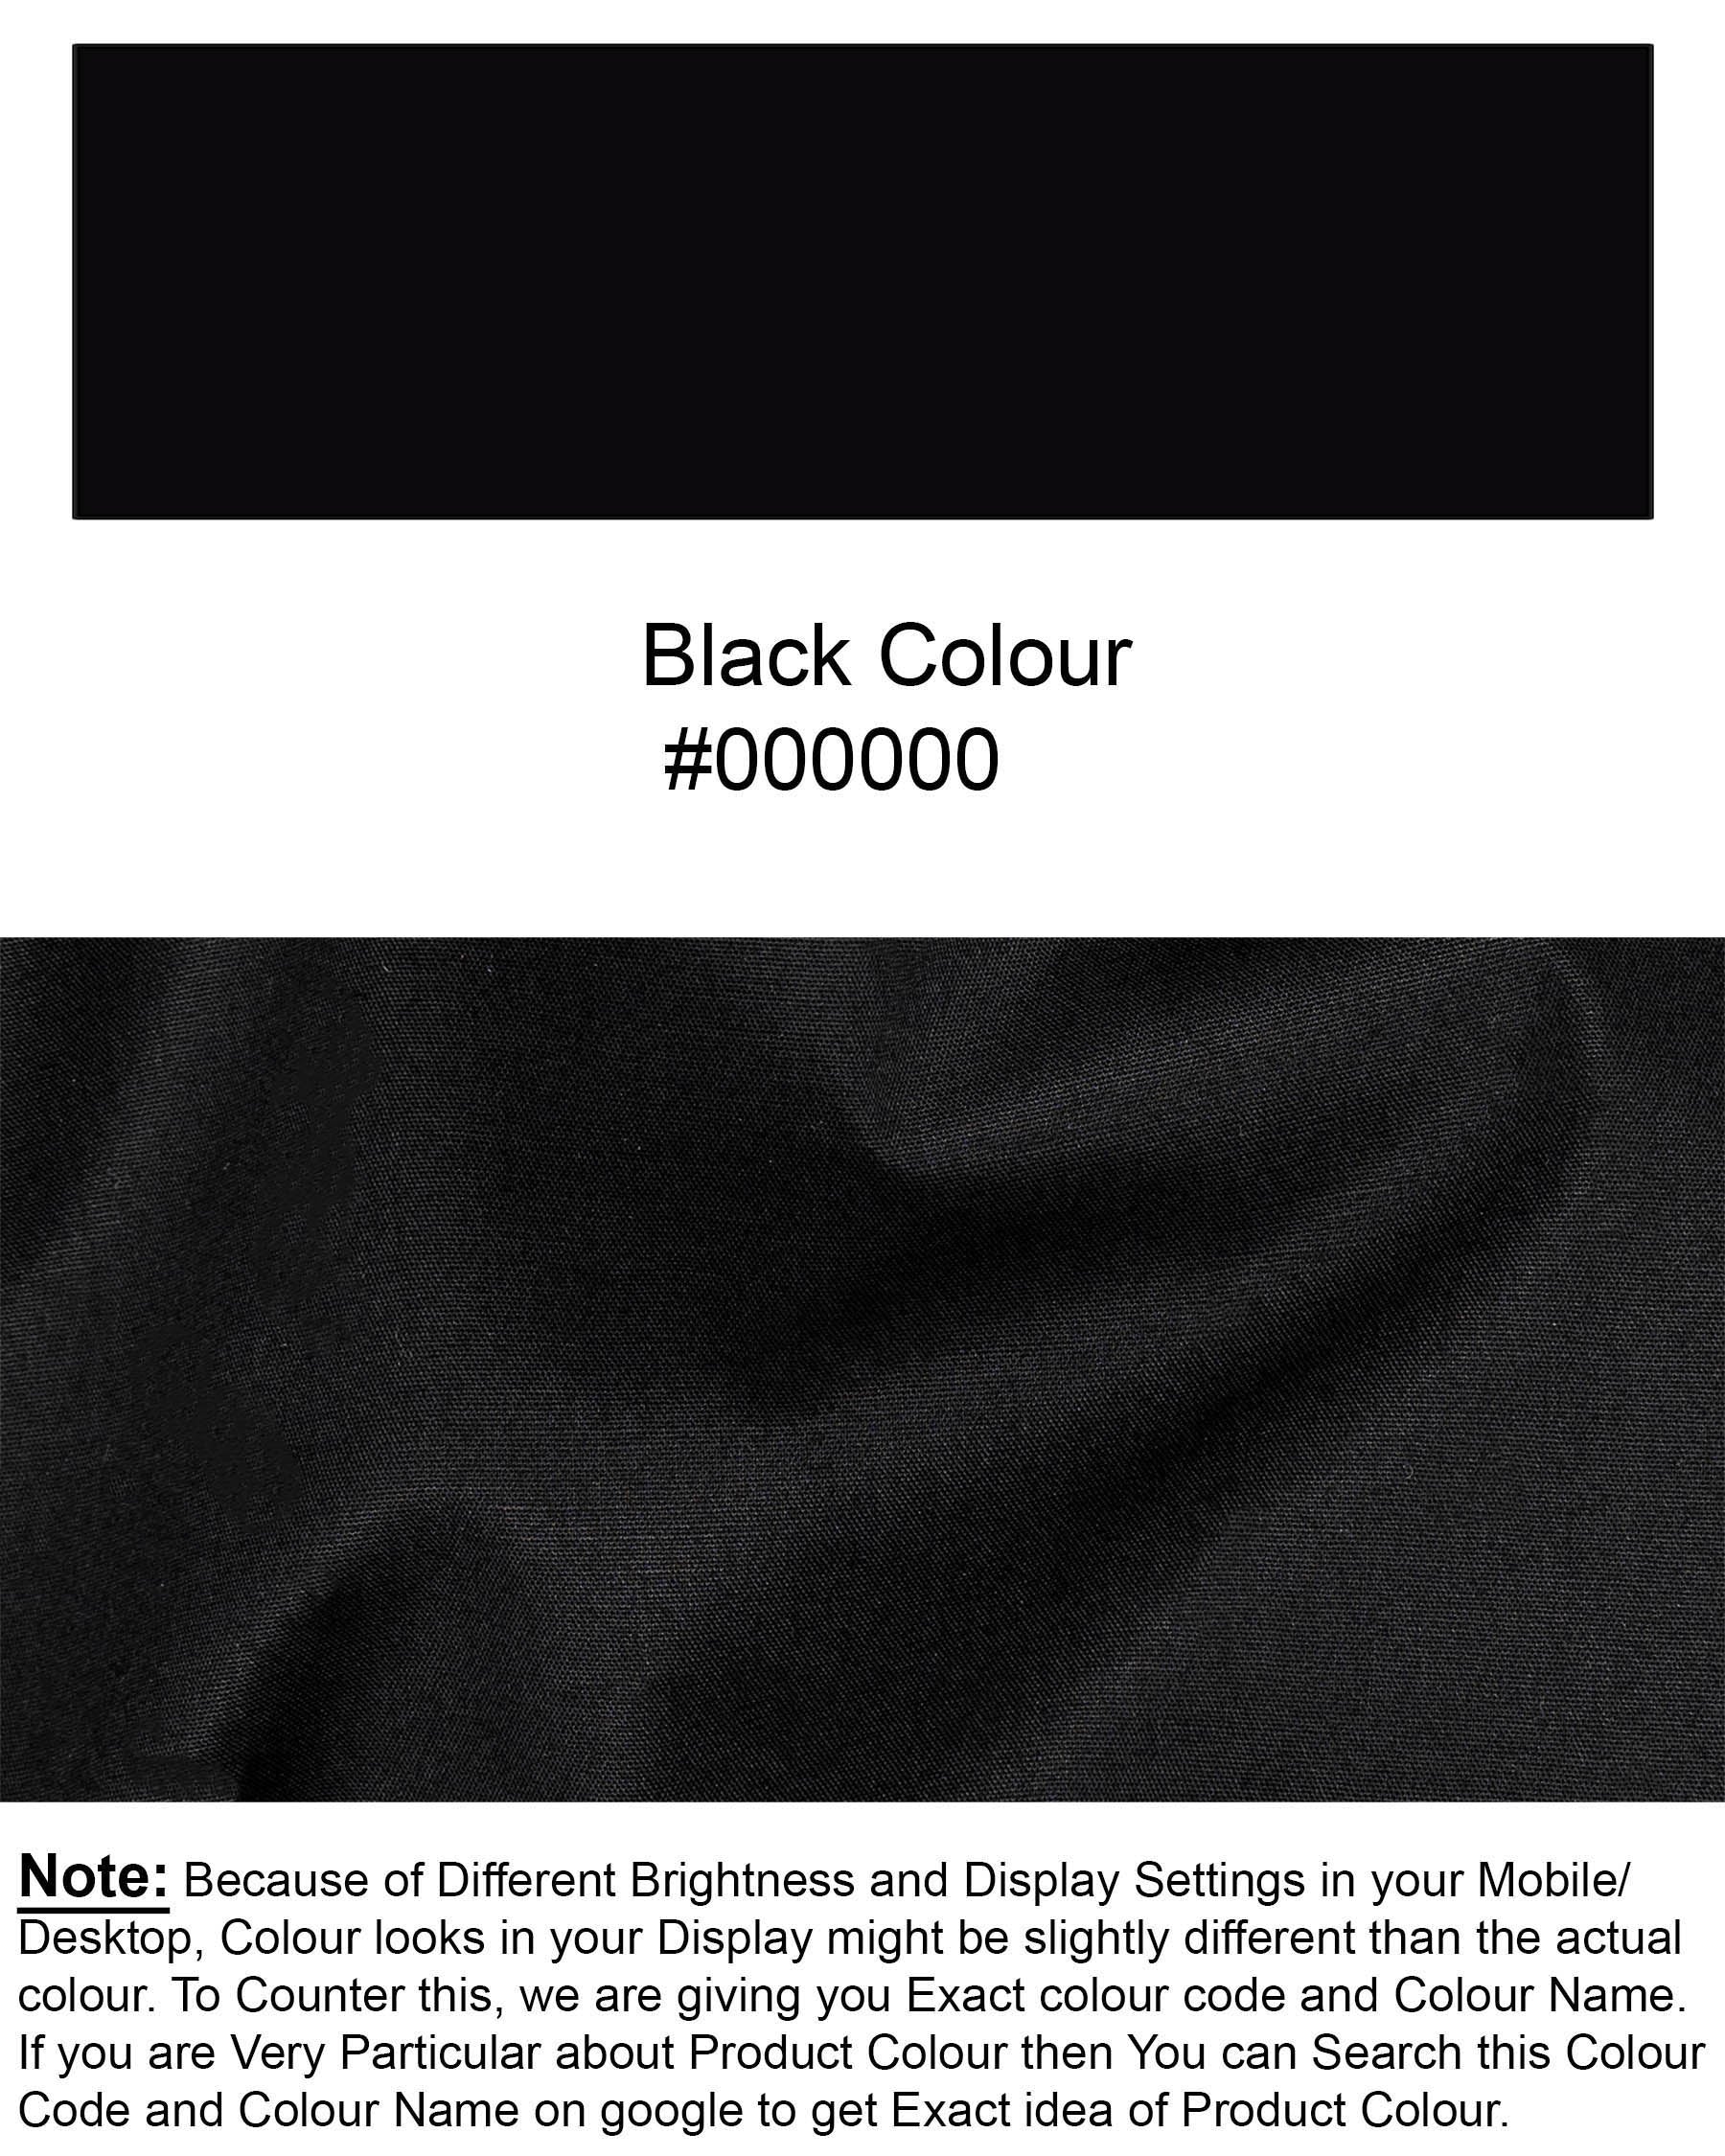 Jade Black Premium Cotton Shirt 6285-BD-BLK-38, 6285-BD-BLK-H-38, 6285-BD-BLK-39, 6285-BD-BLK-H-39, 6285-BD-BLK-40, 6285-BD-BLK-H-40, 6285-BD-BLK-42, 6285-BD-BLK-H-42, 6285-BD-BLK-44, 6285-BD-BLK-H-44, 6285-BD-BLK-46, 6285-BD-BLK-H-46, 6285-BD-BLK-48, 6285-BD-BLK-H-48, 6285-BD-BLK-50, 6285-BD-BLK-H-50, 6285-BD-BLK-52, 6285-BD-BLK-H-52